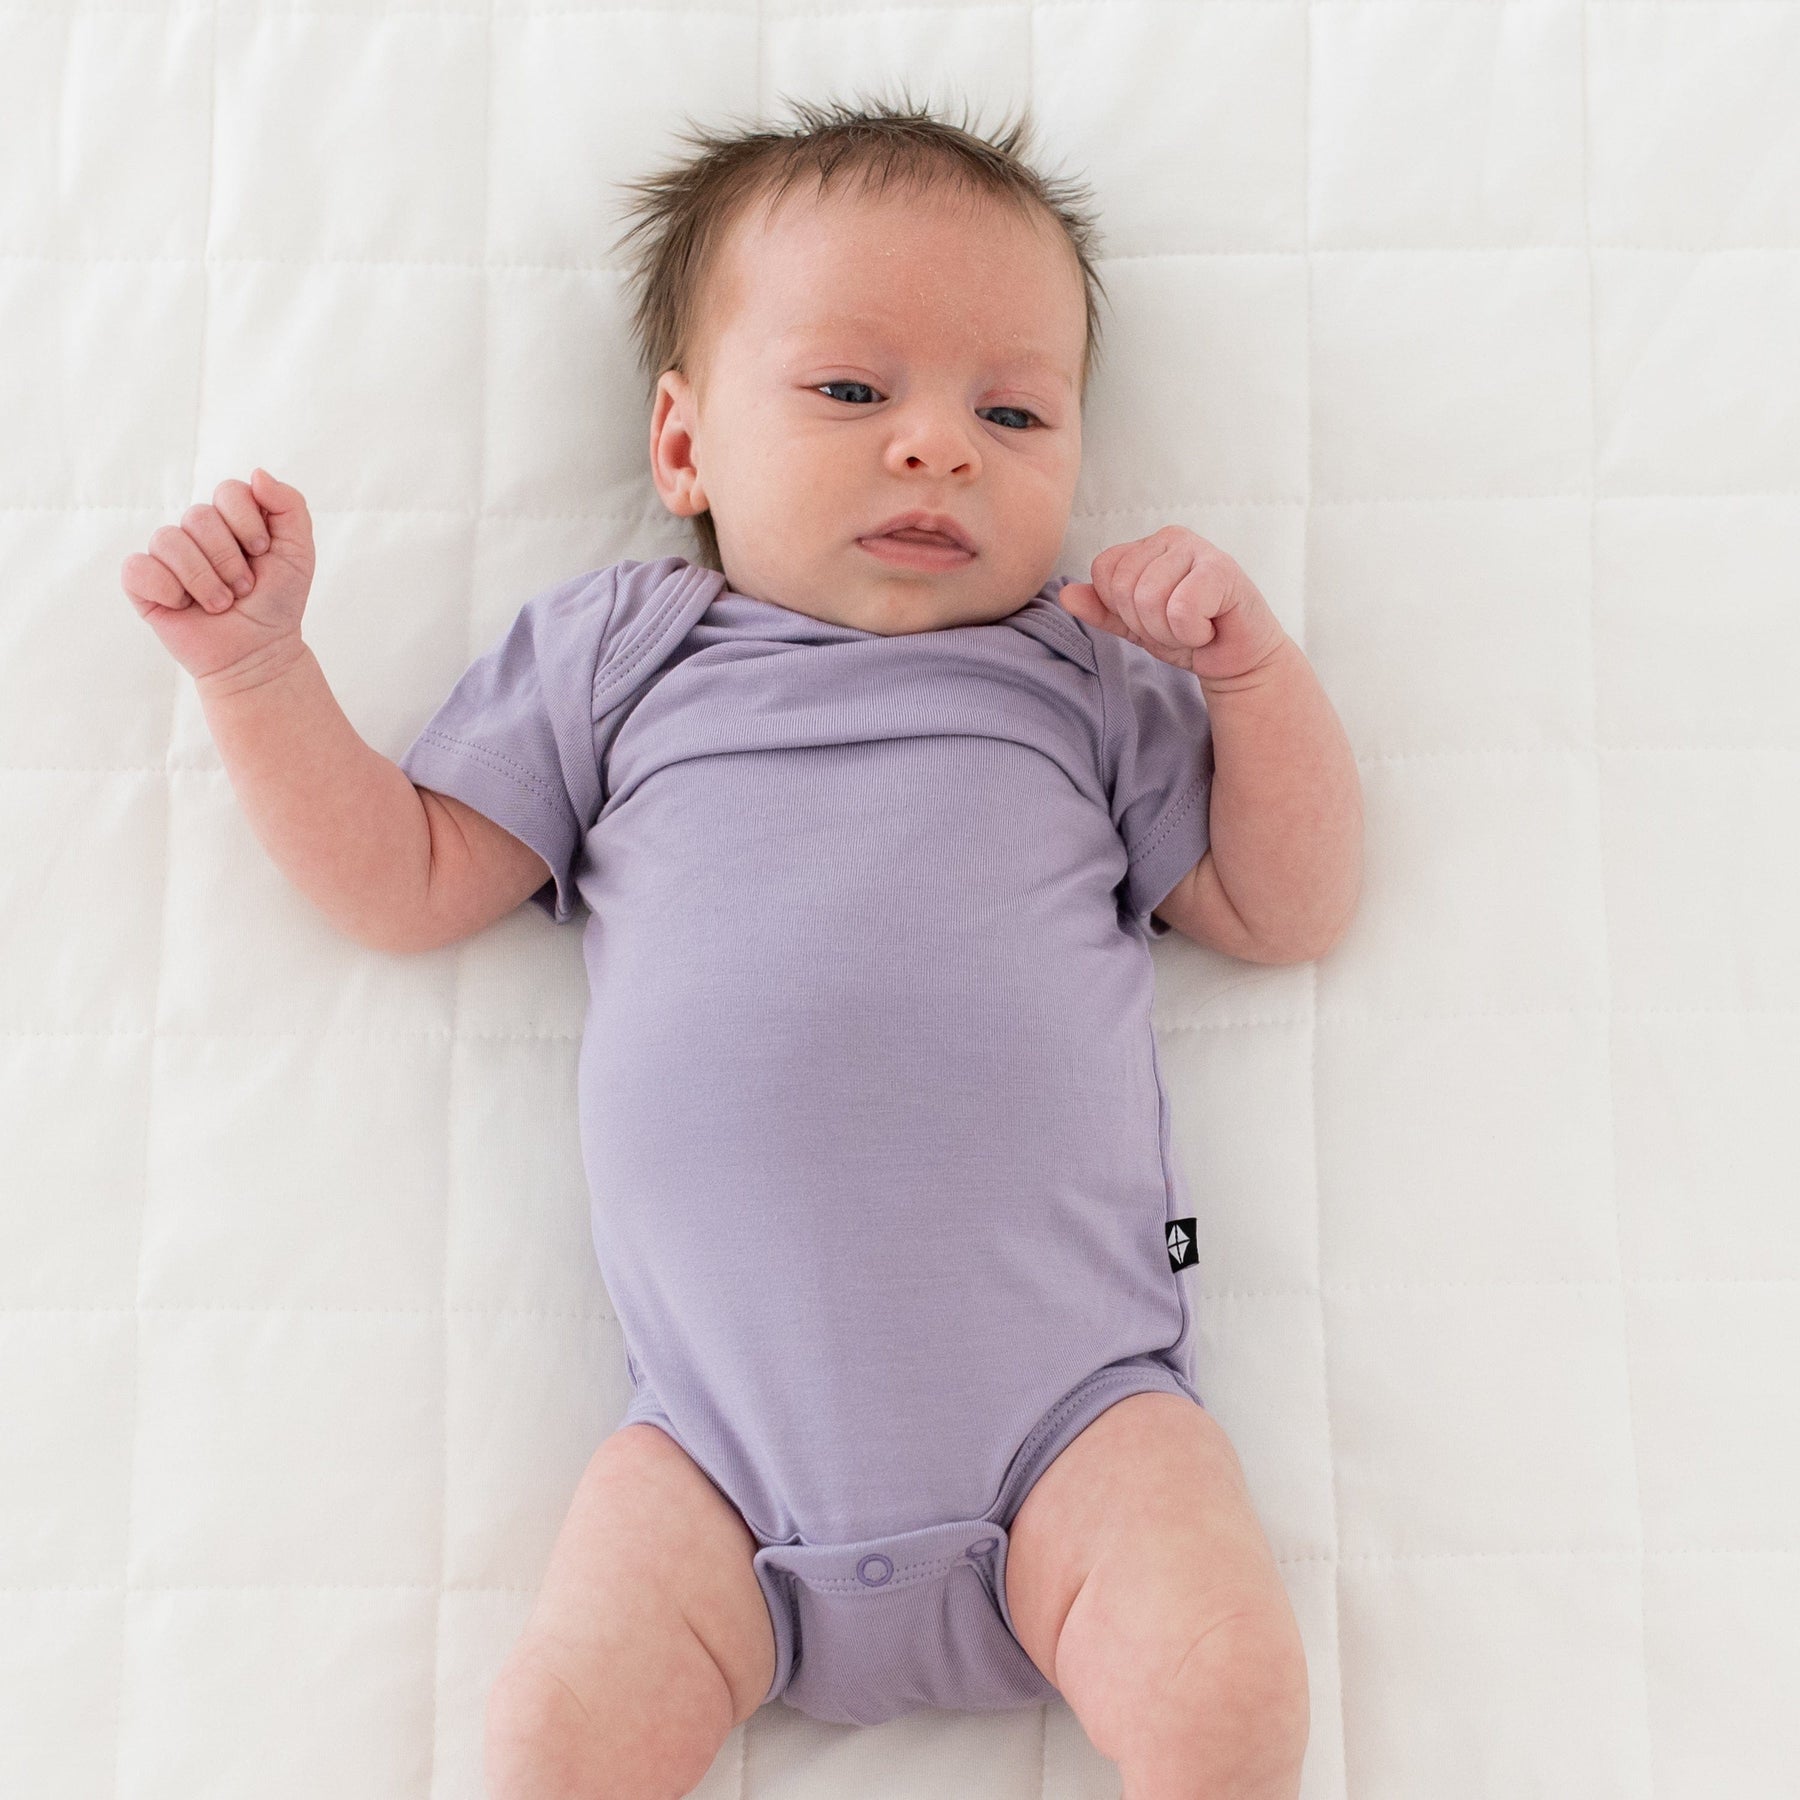 Baby wearing Kyte Baby infant Bodysuit in Taro